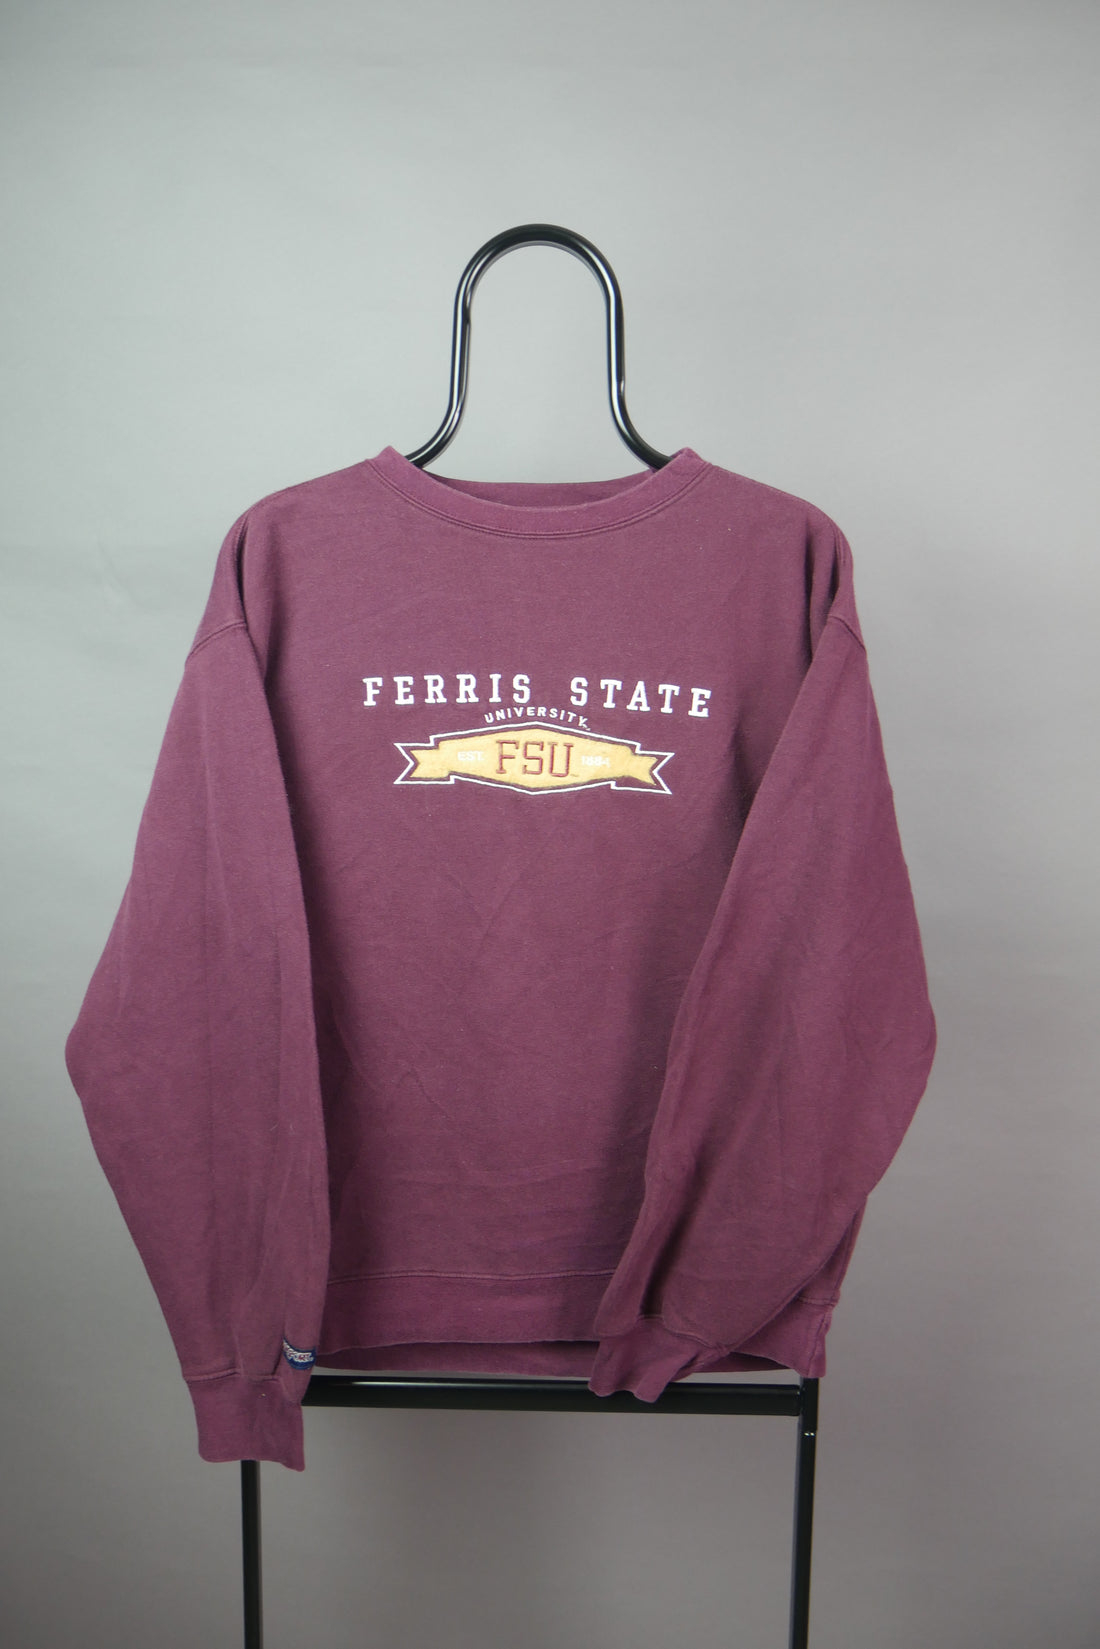 The Jansport Ferris State Embroidered Sweatshirt (M)